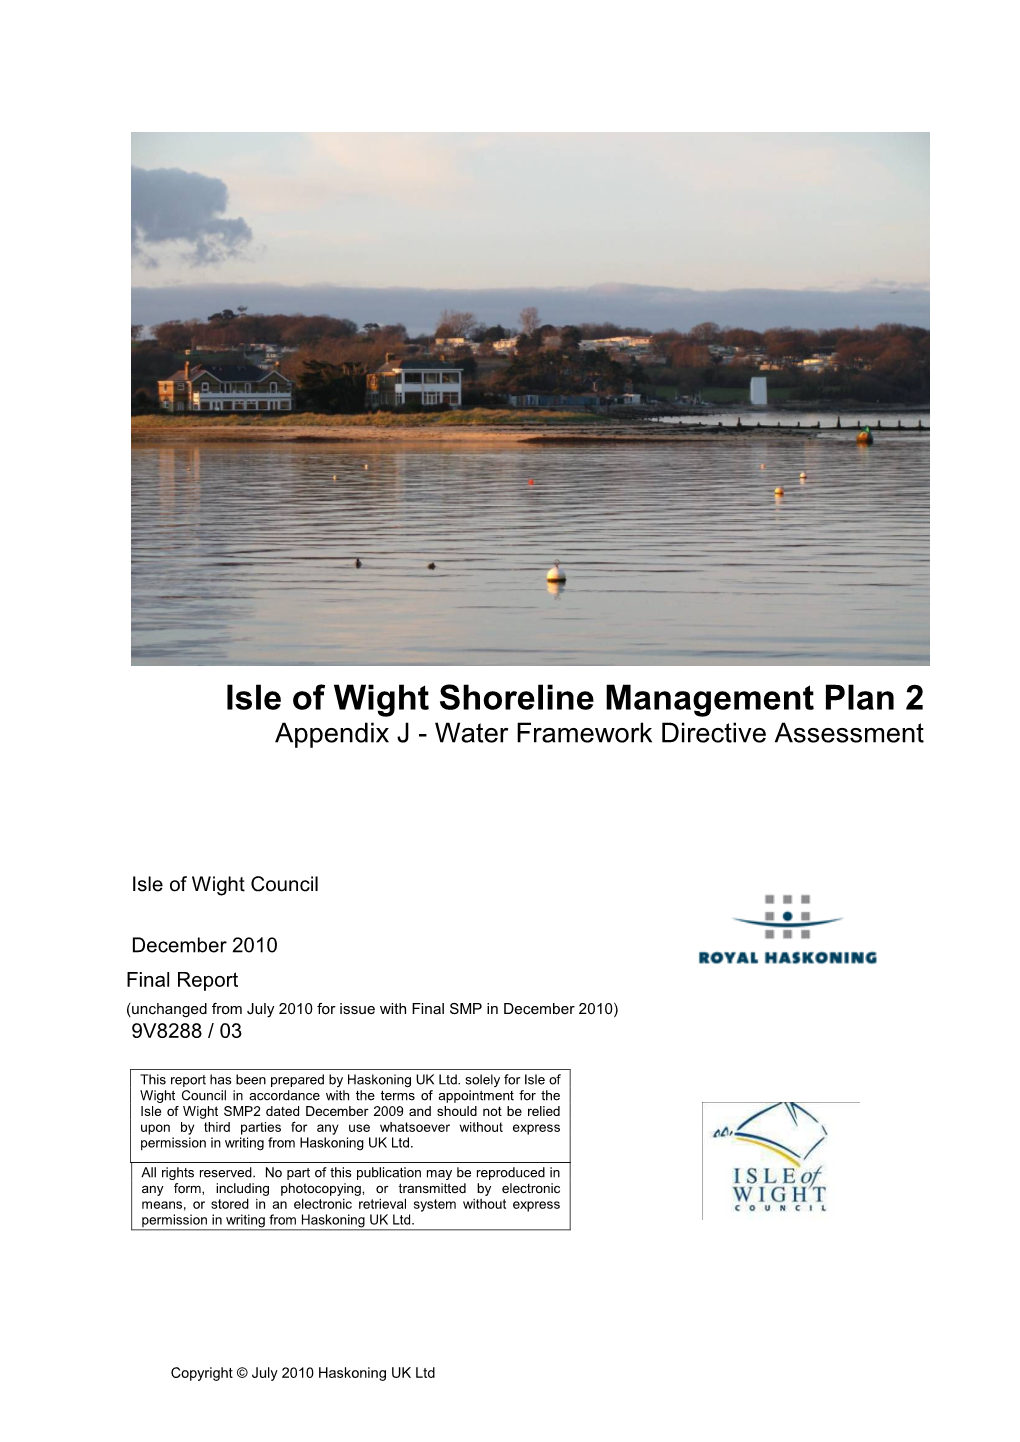 Isle of Wight Shoreline Management Plan 2 Appendix J - Water Framework Directive Assessment